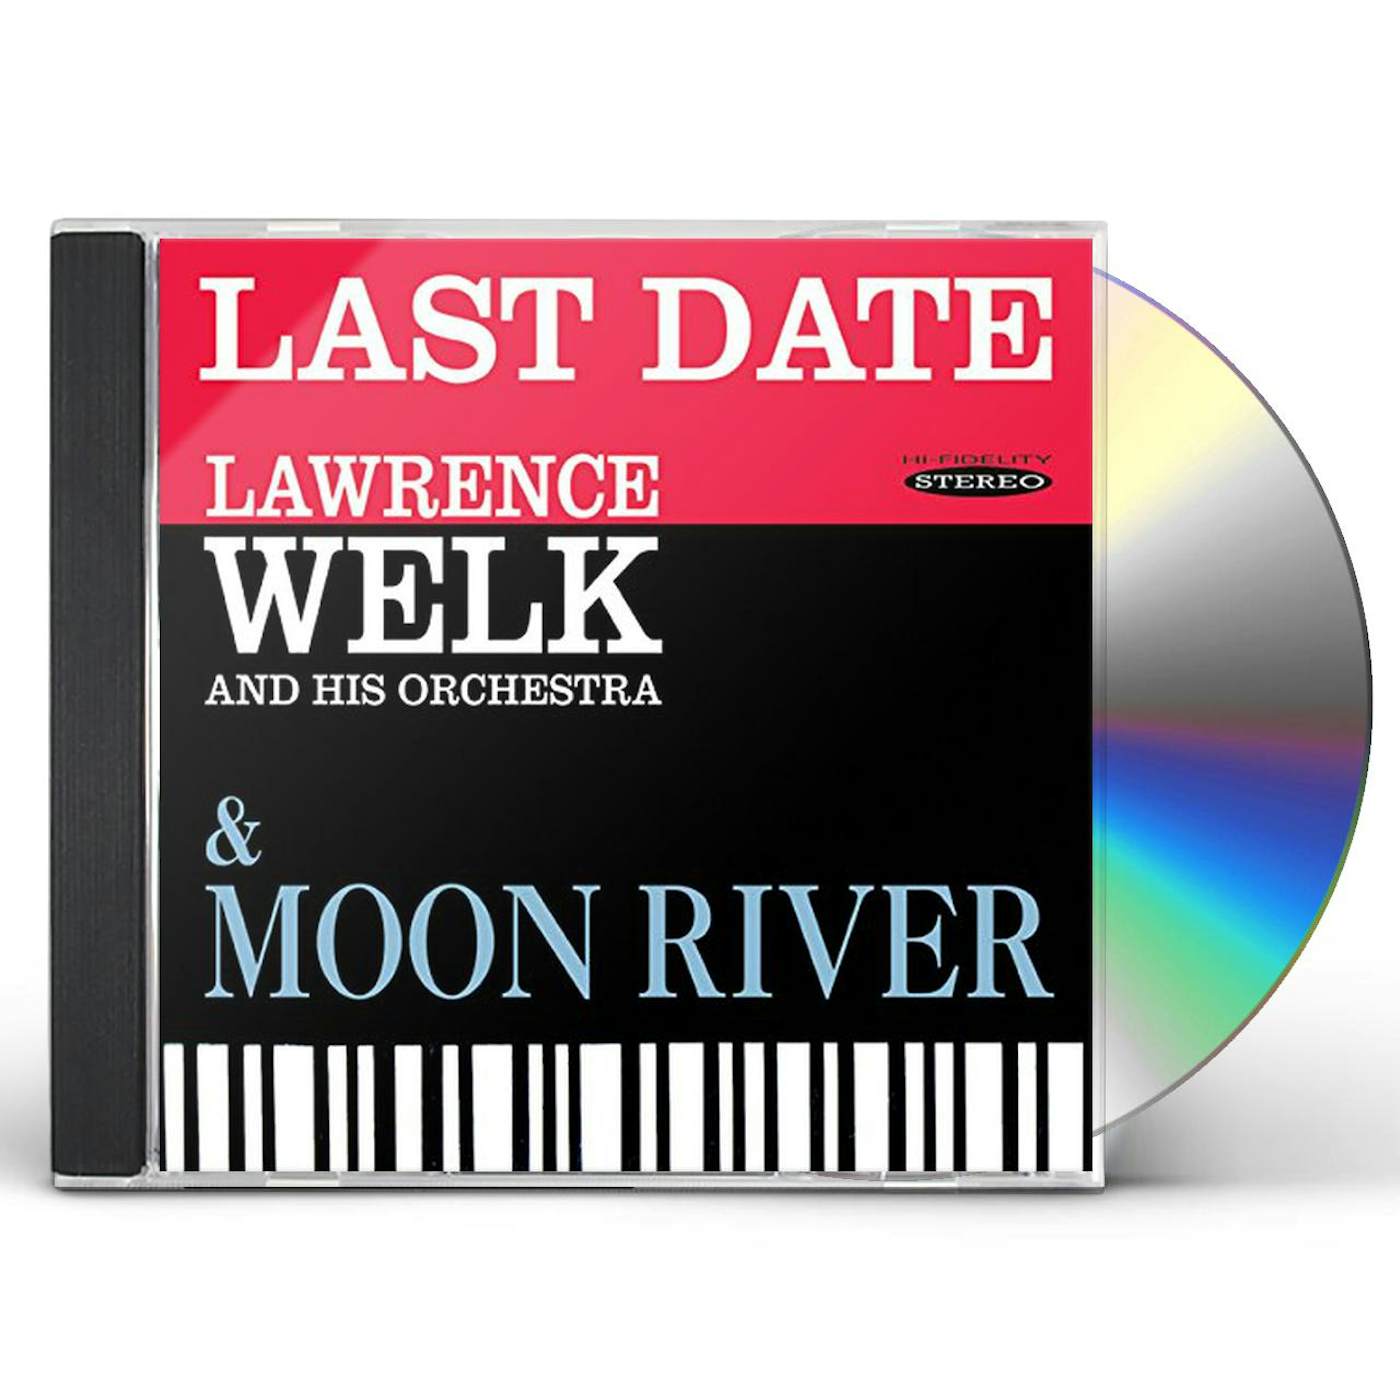 Lawrence Welk LAST DATE & MOON RIVER CD